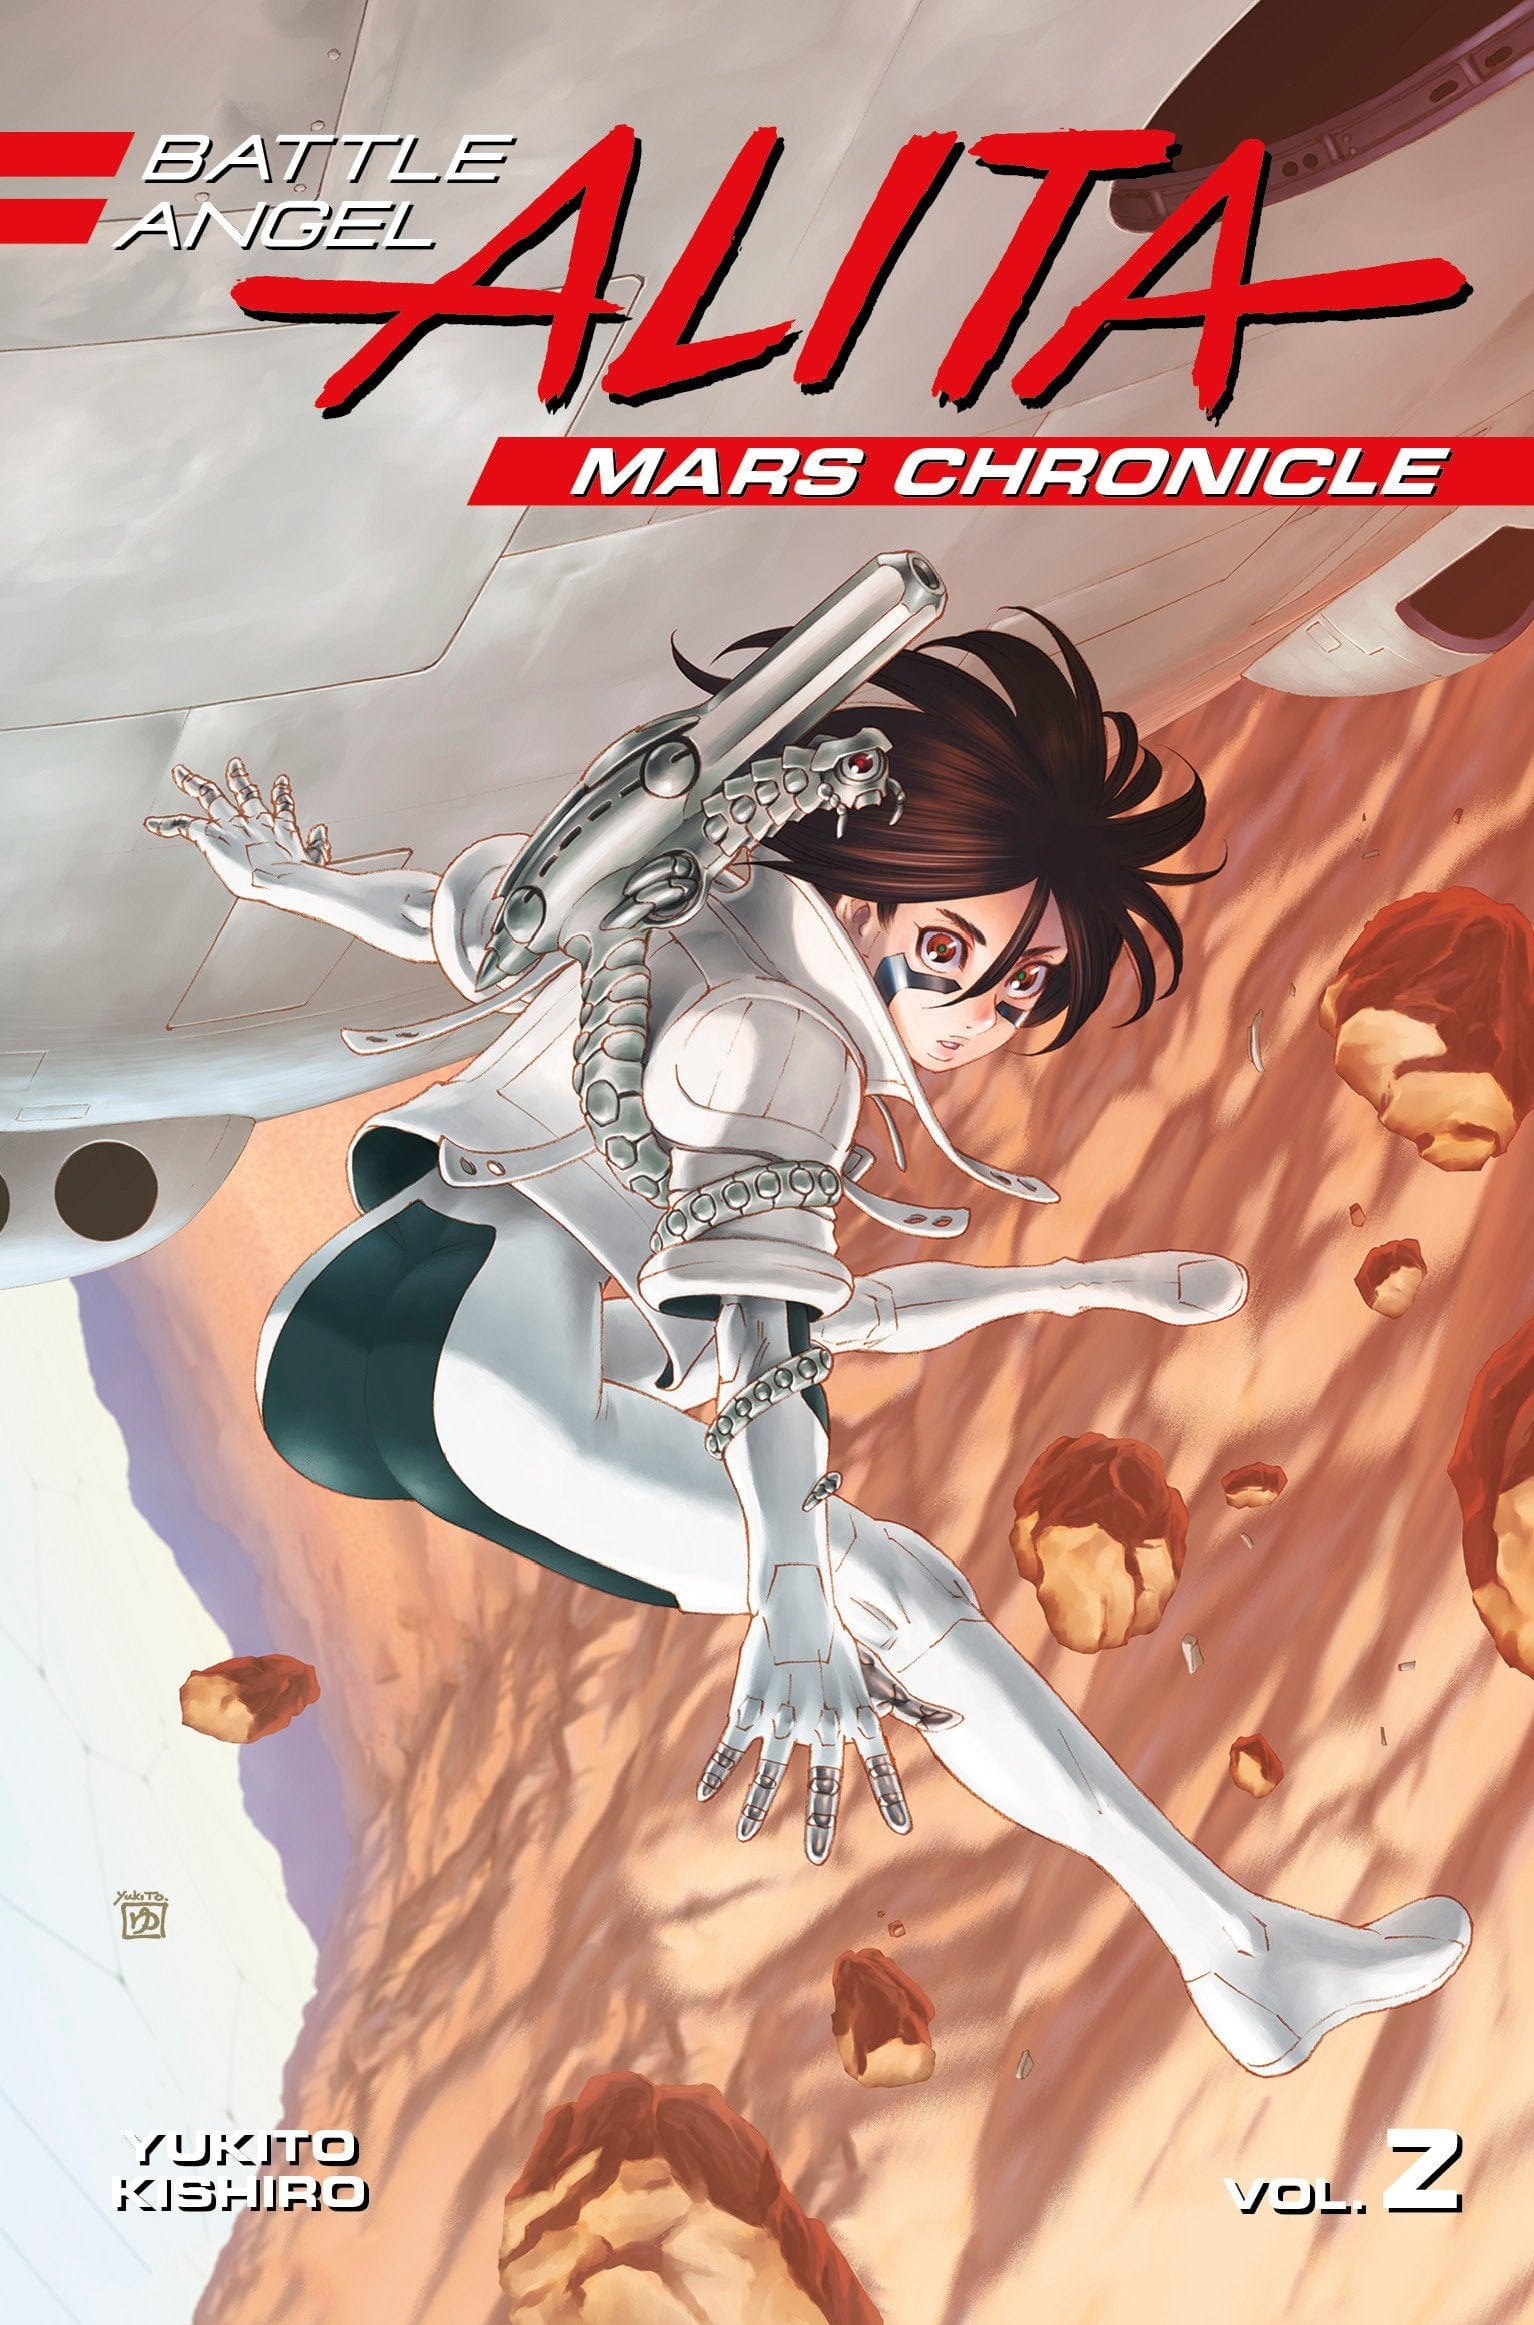 Battle Angel Alita: Mars Chronicle Vol. 2 - Third Eye